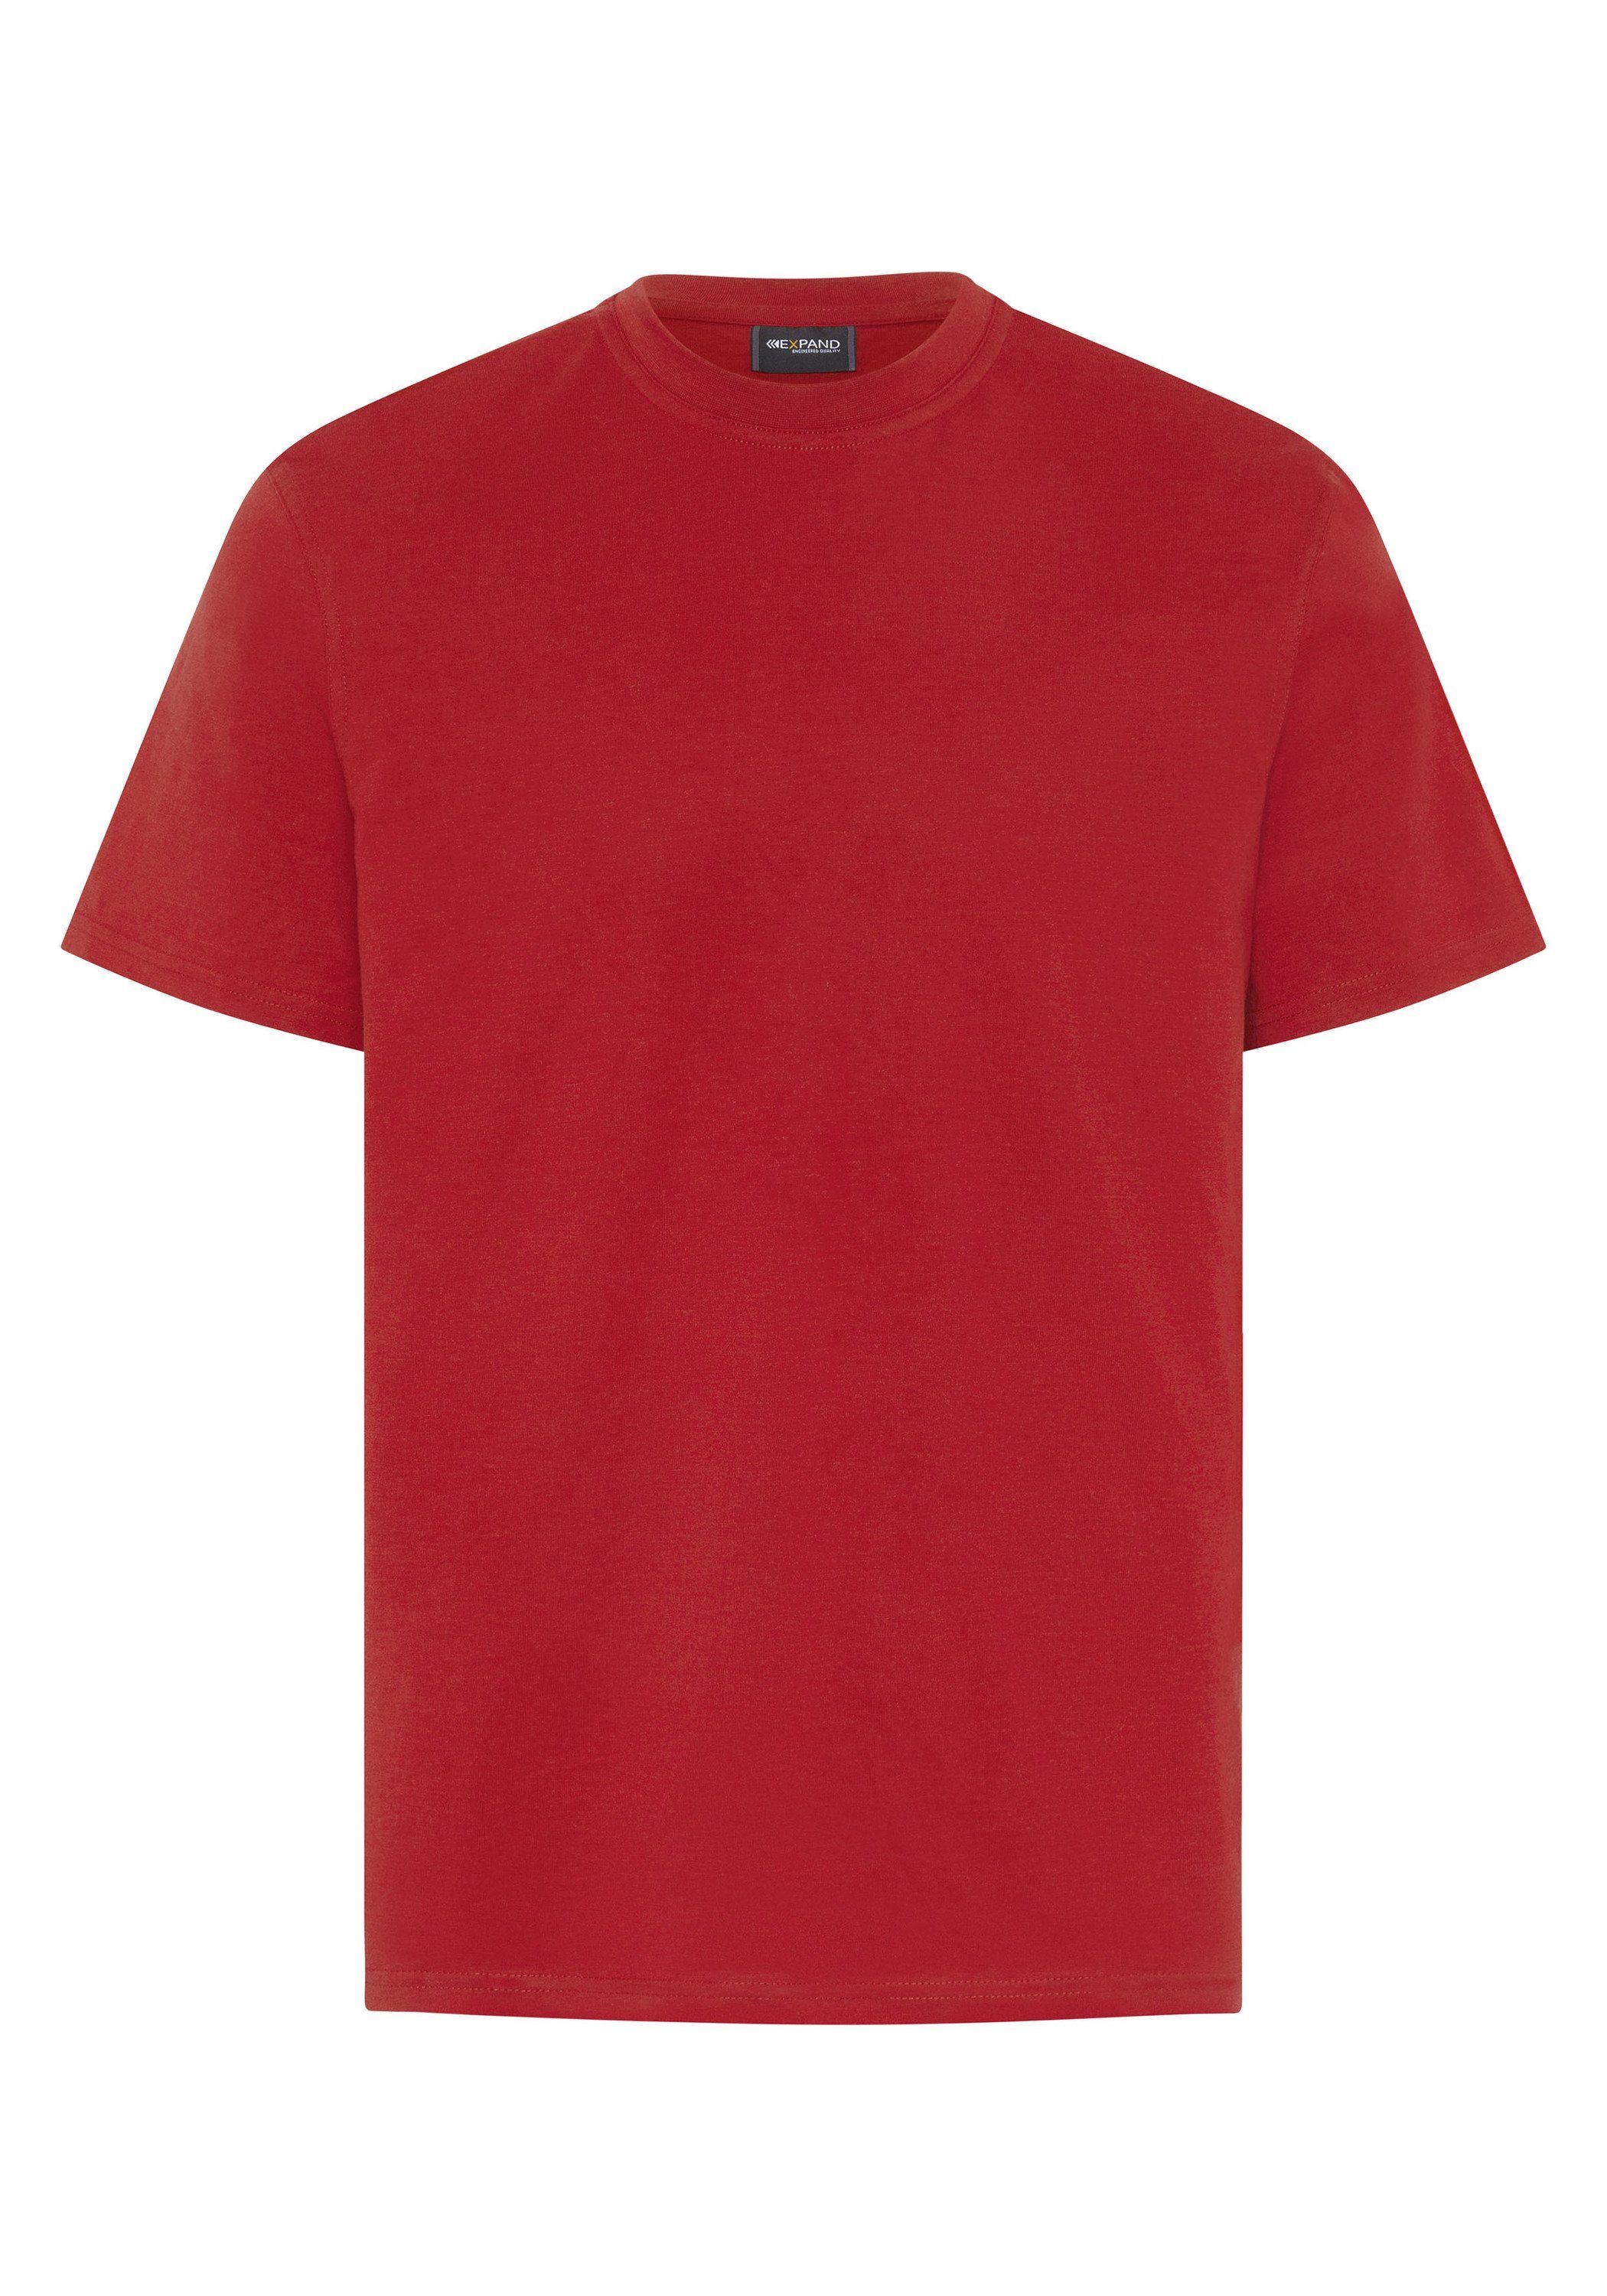 T-Shirt Expand rot einlaufvorbehandelt